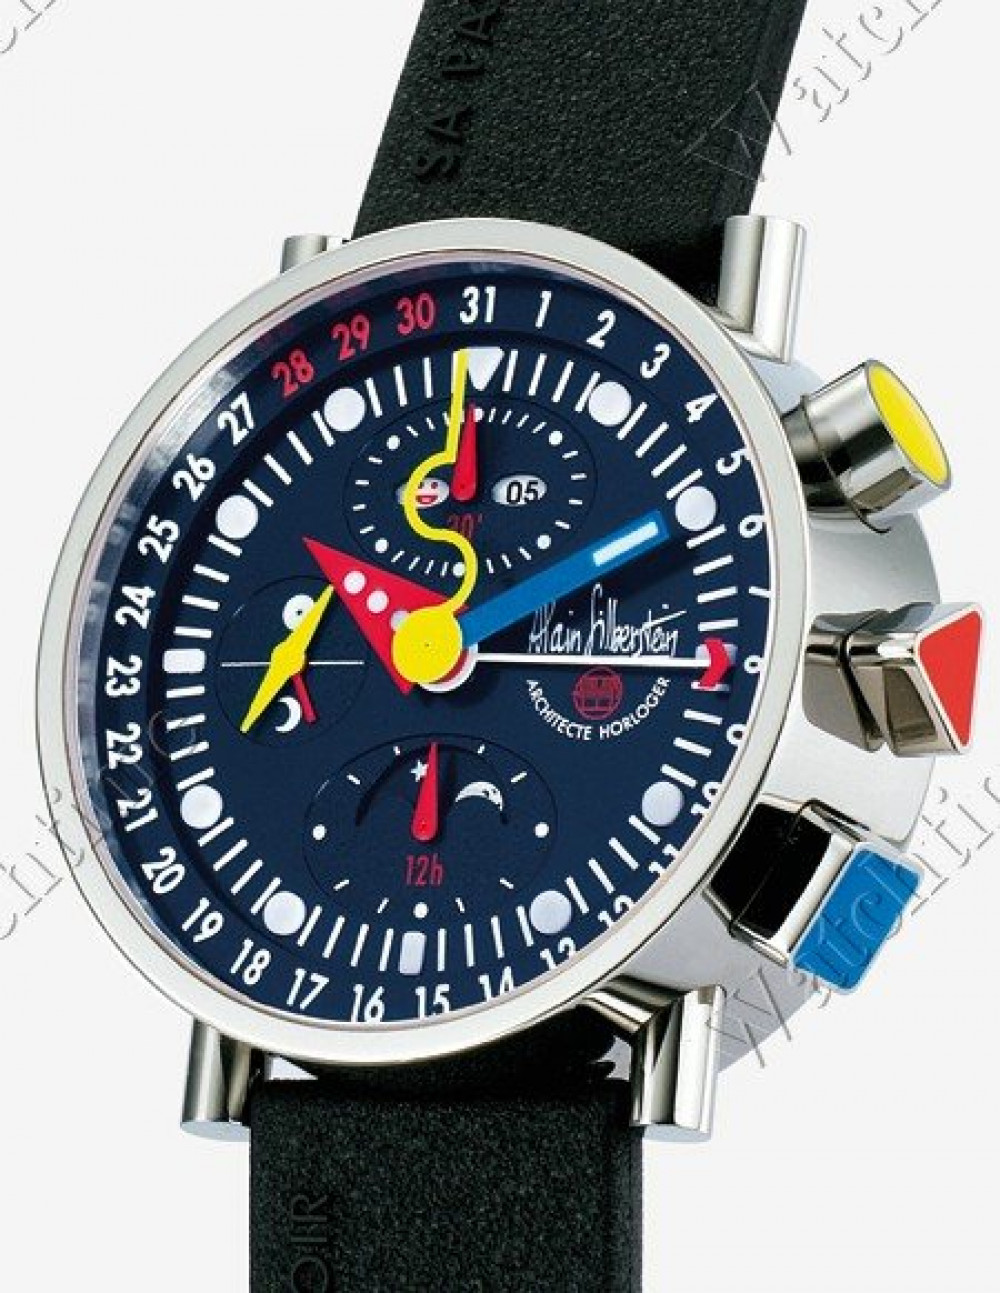 Zegarek firmy Alain Silberstein, model Krono Bauhaus 2 Titan